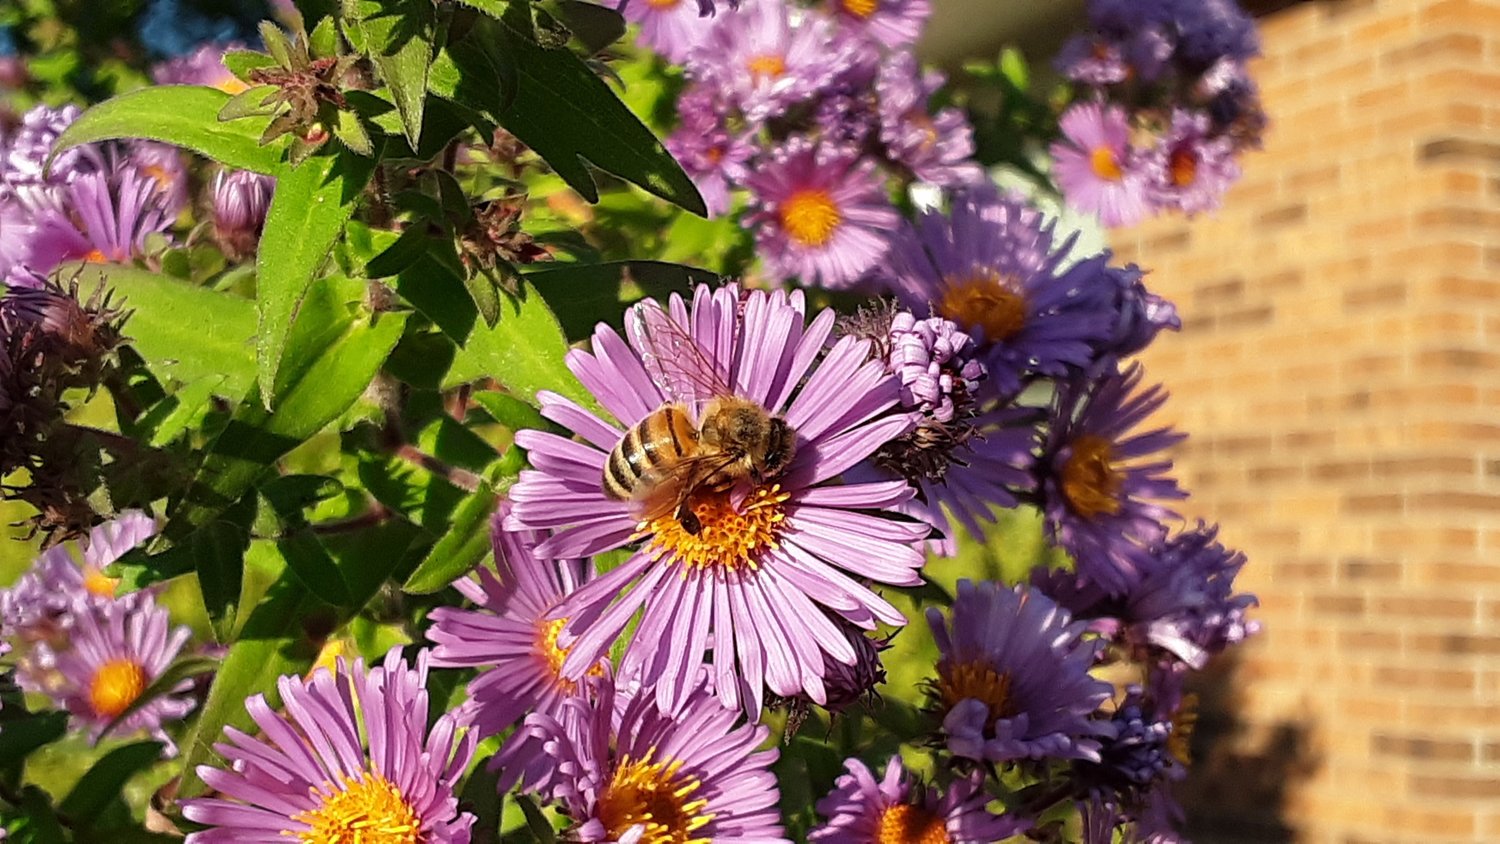 A honeybee sits on an aster.